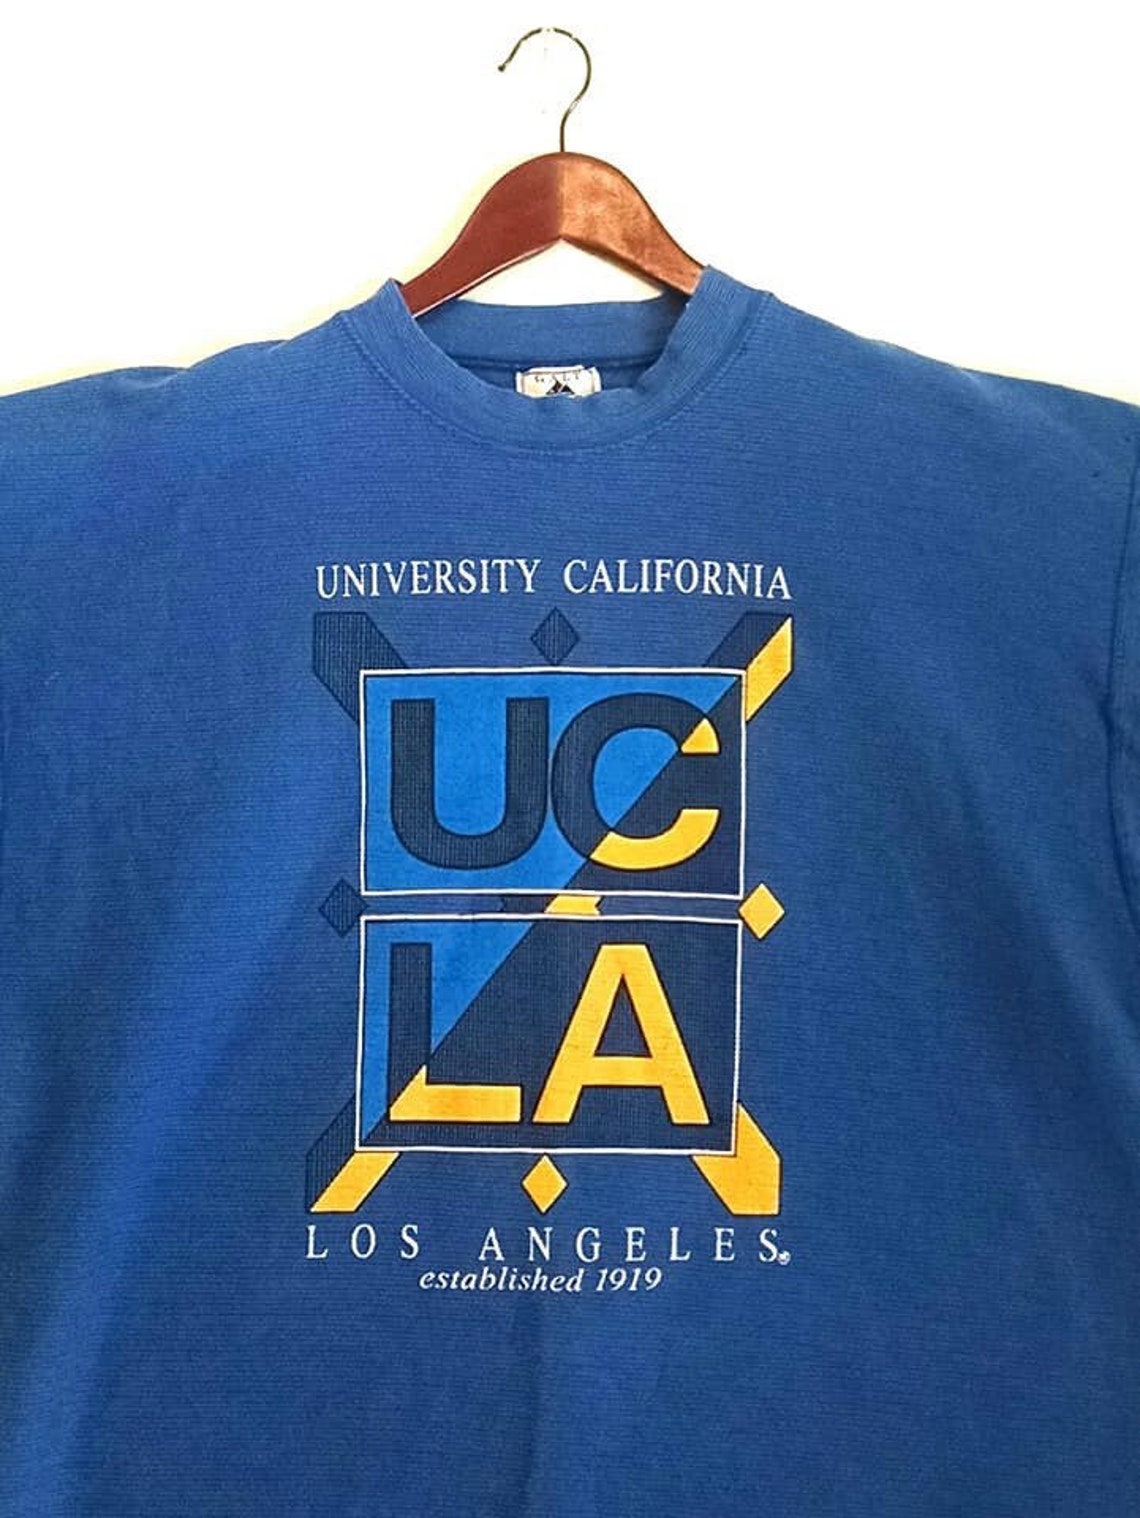 Vintage UCLA University California Los Angeles collegiate | Etsy